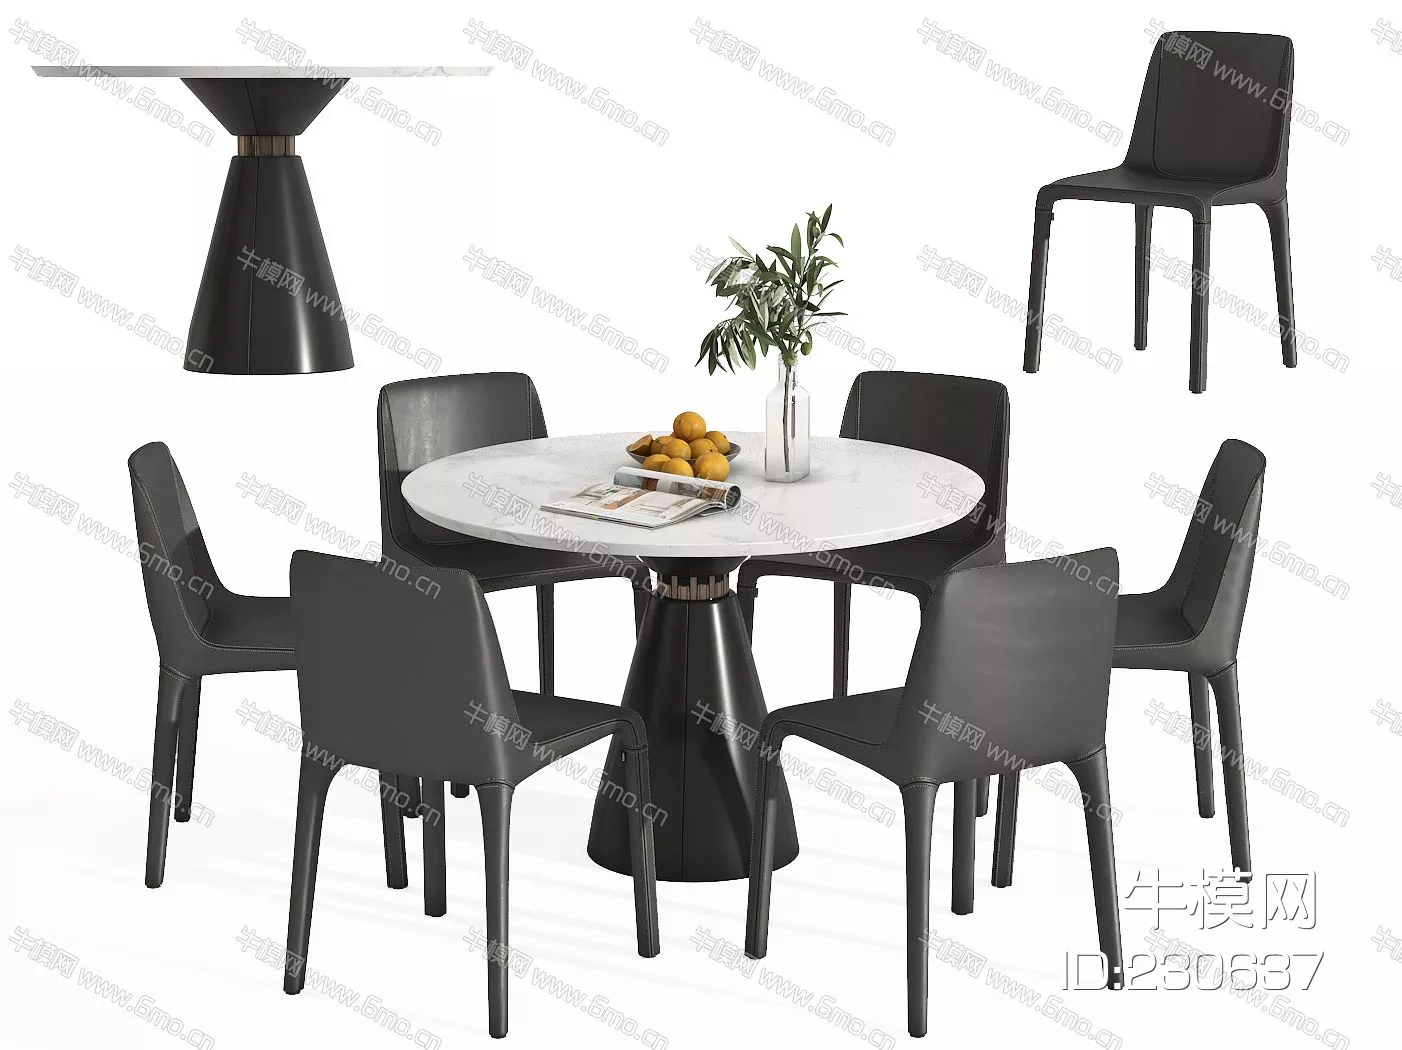 MODERN DINING TABLE SET - SKETCHUP 3D MODEL - VRAY - 230637